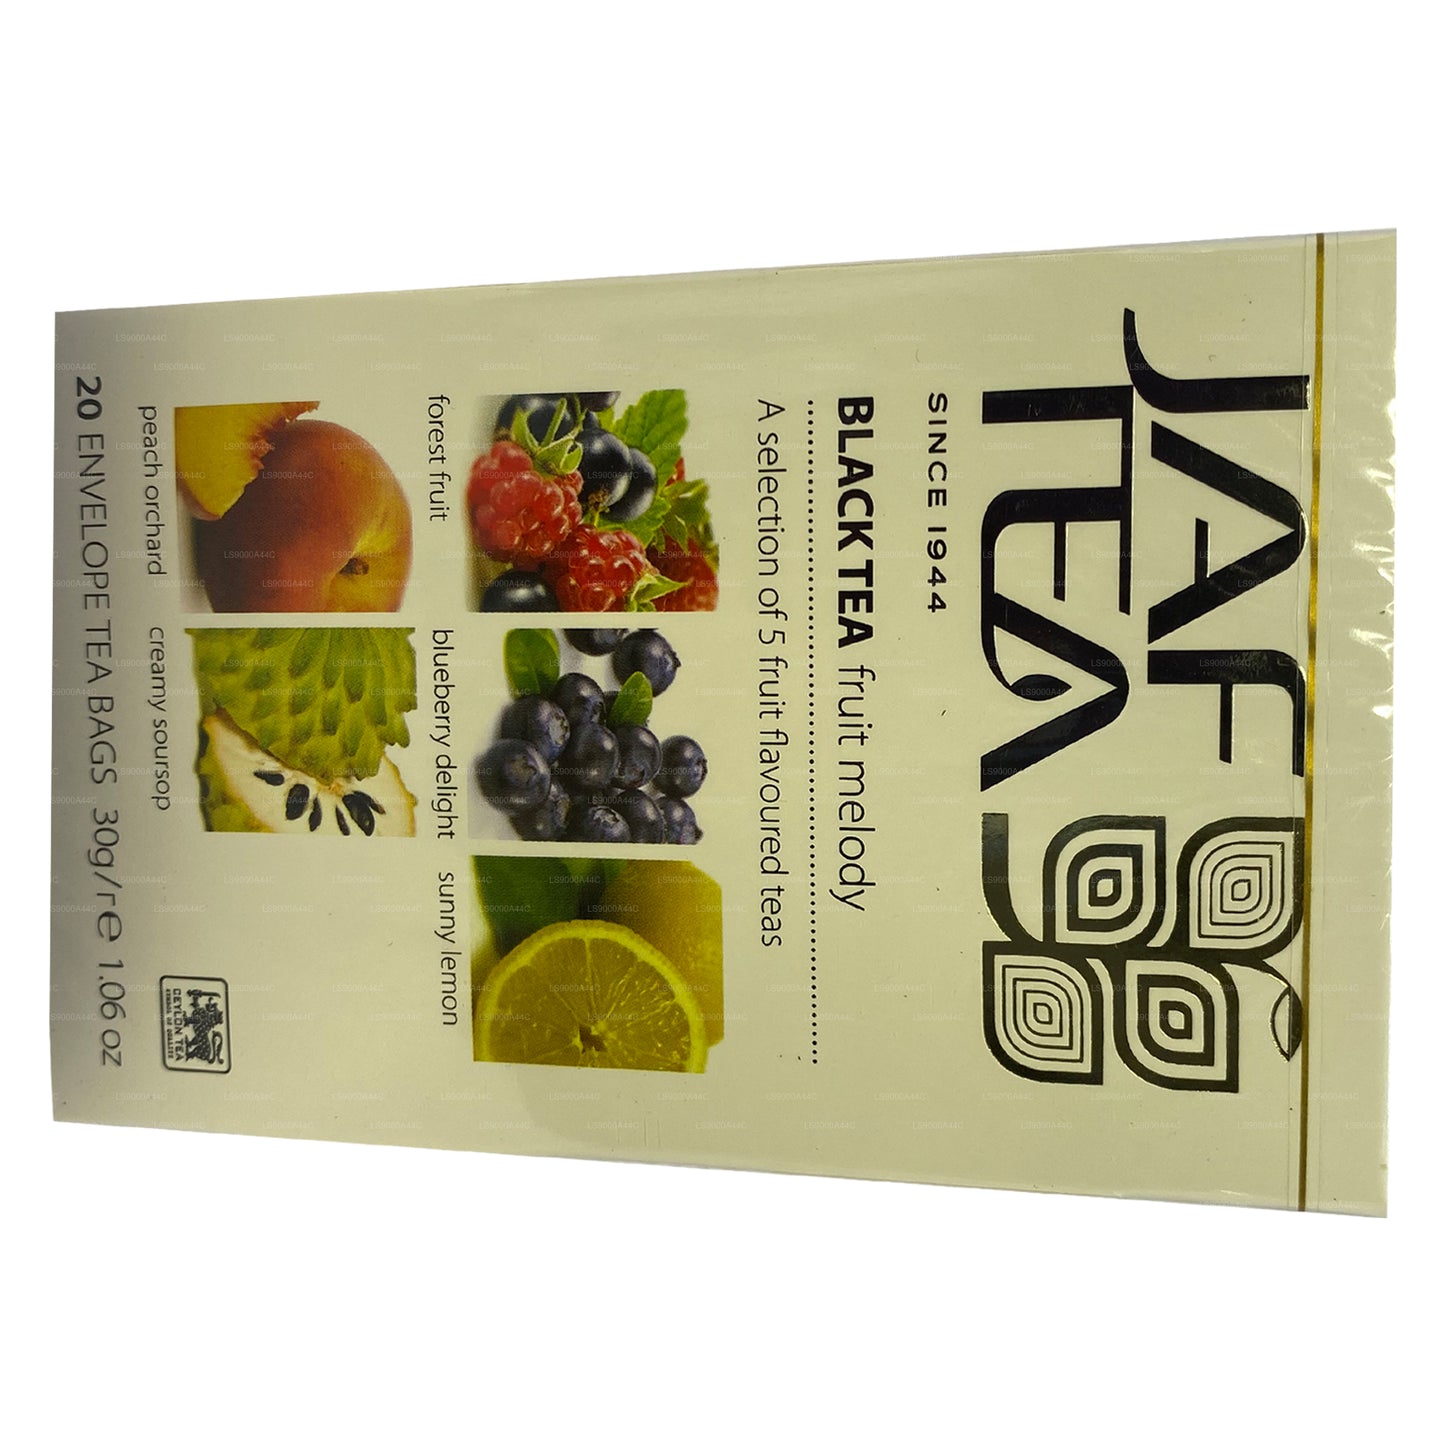 Jaf Tea Pure Fruits Collection Zwarte thee Fruit Melody (30 g) 20 theezakjes